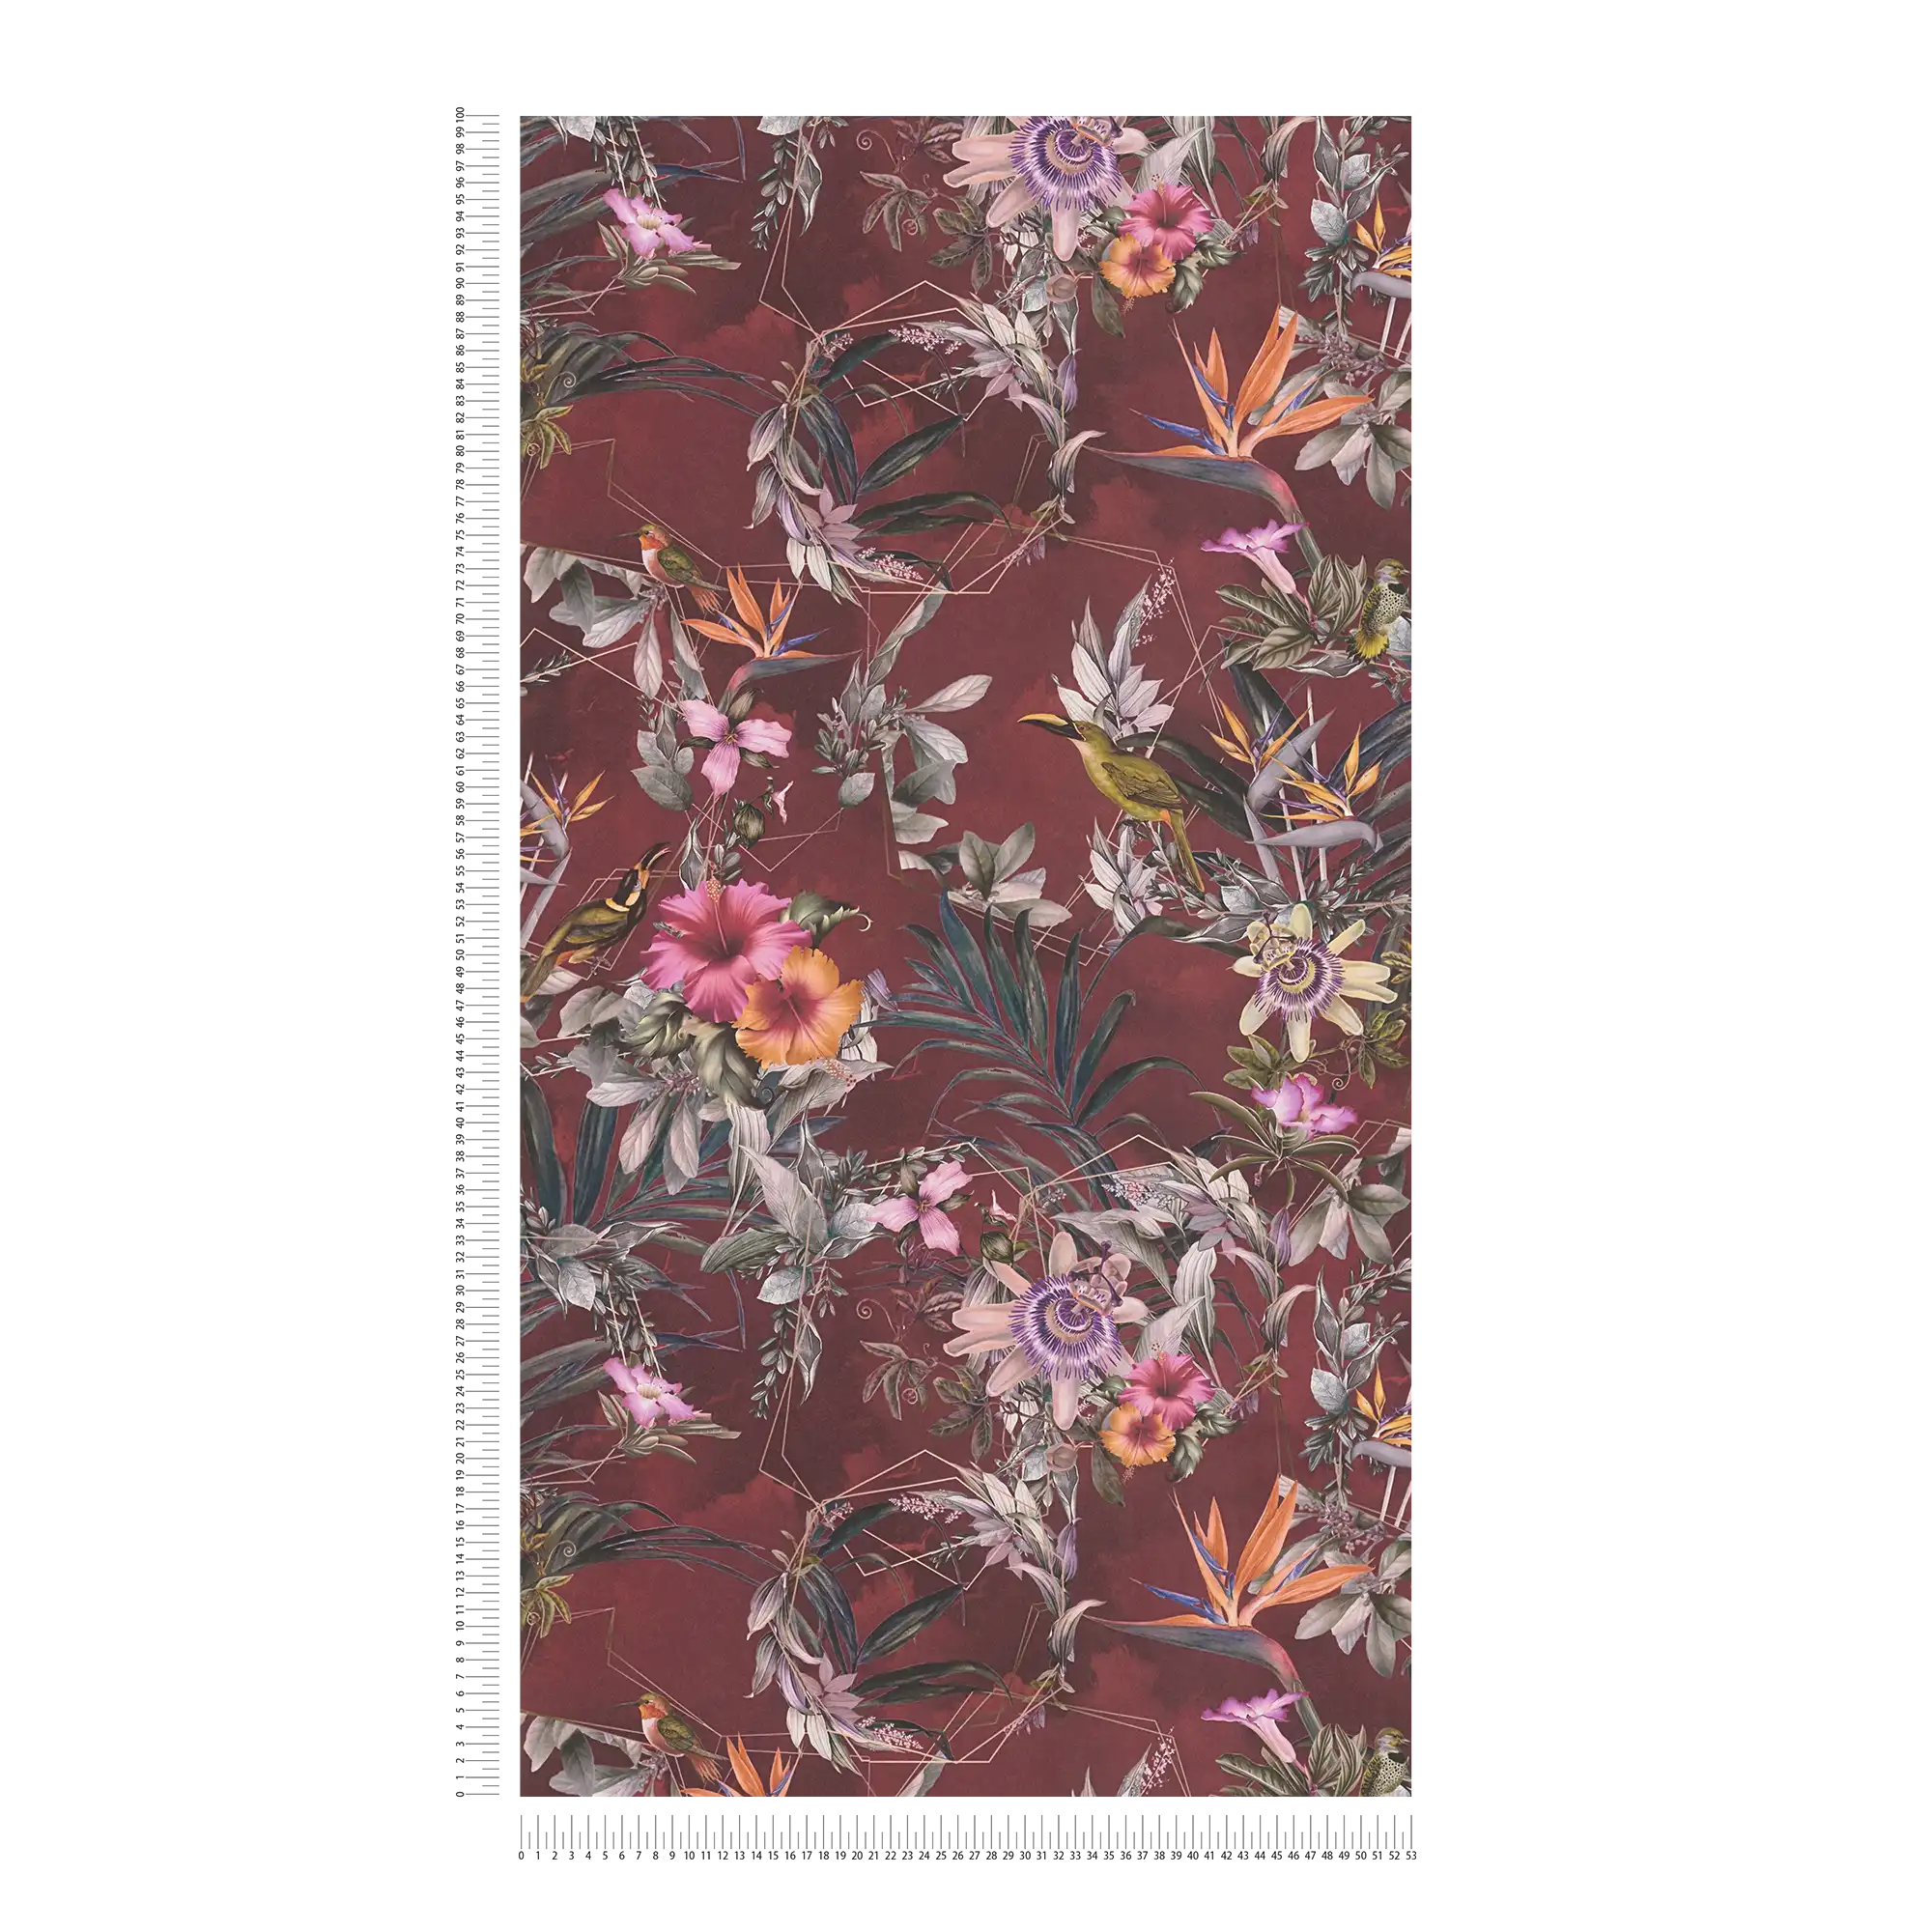             Blumentapete Hibiskus & Vögel im Hawaii Stil – Rot, Braun, Grün
        